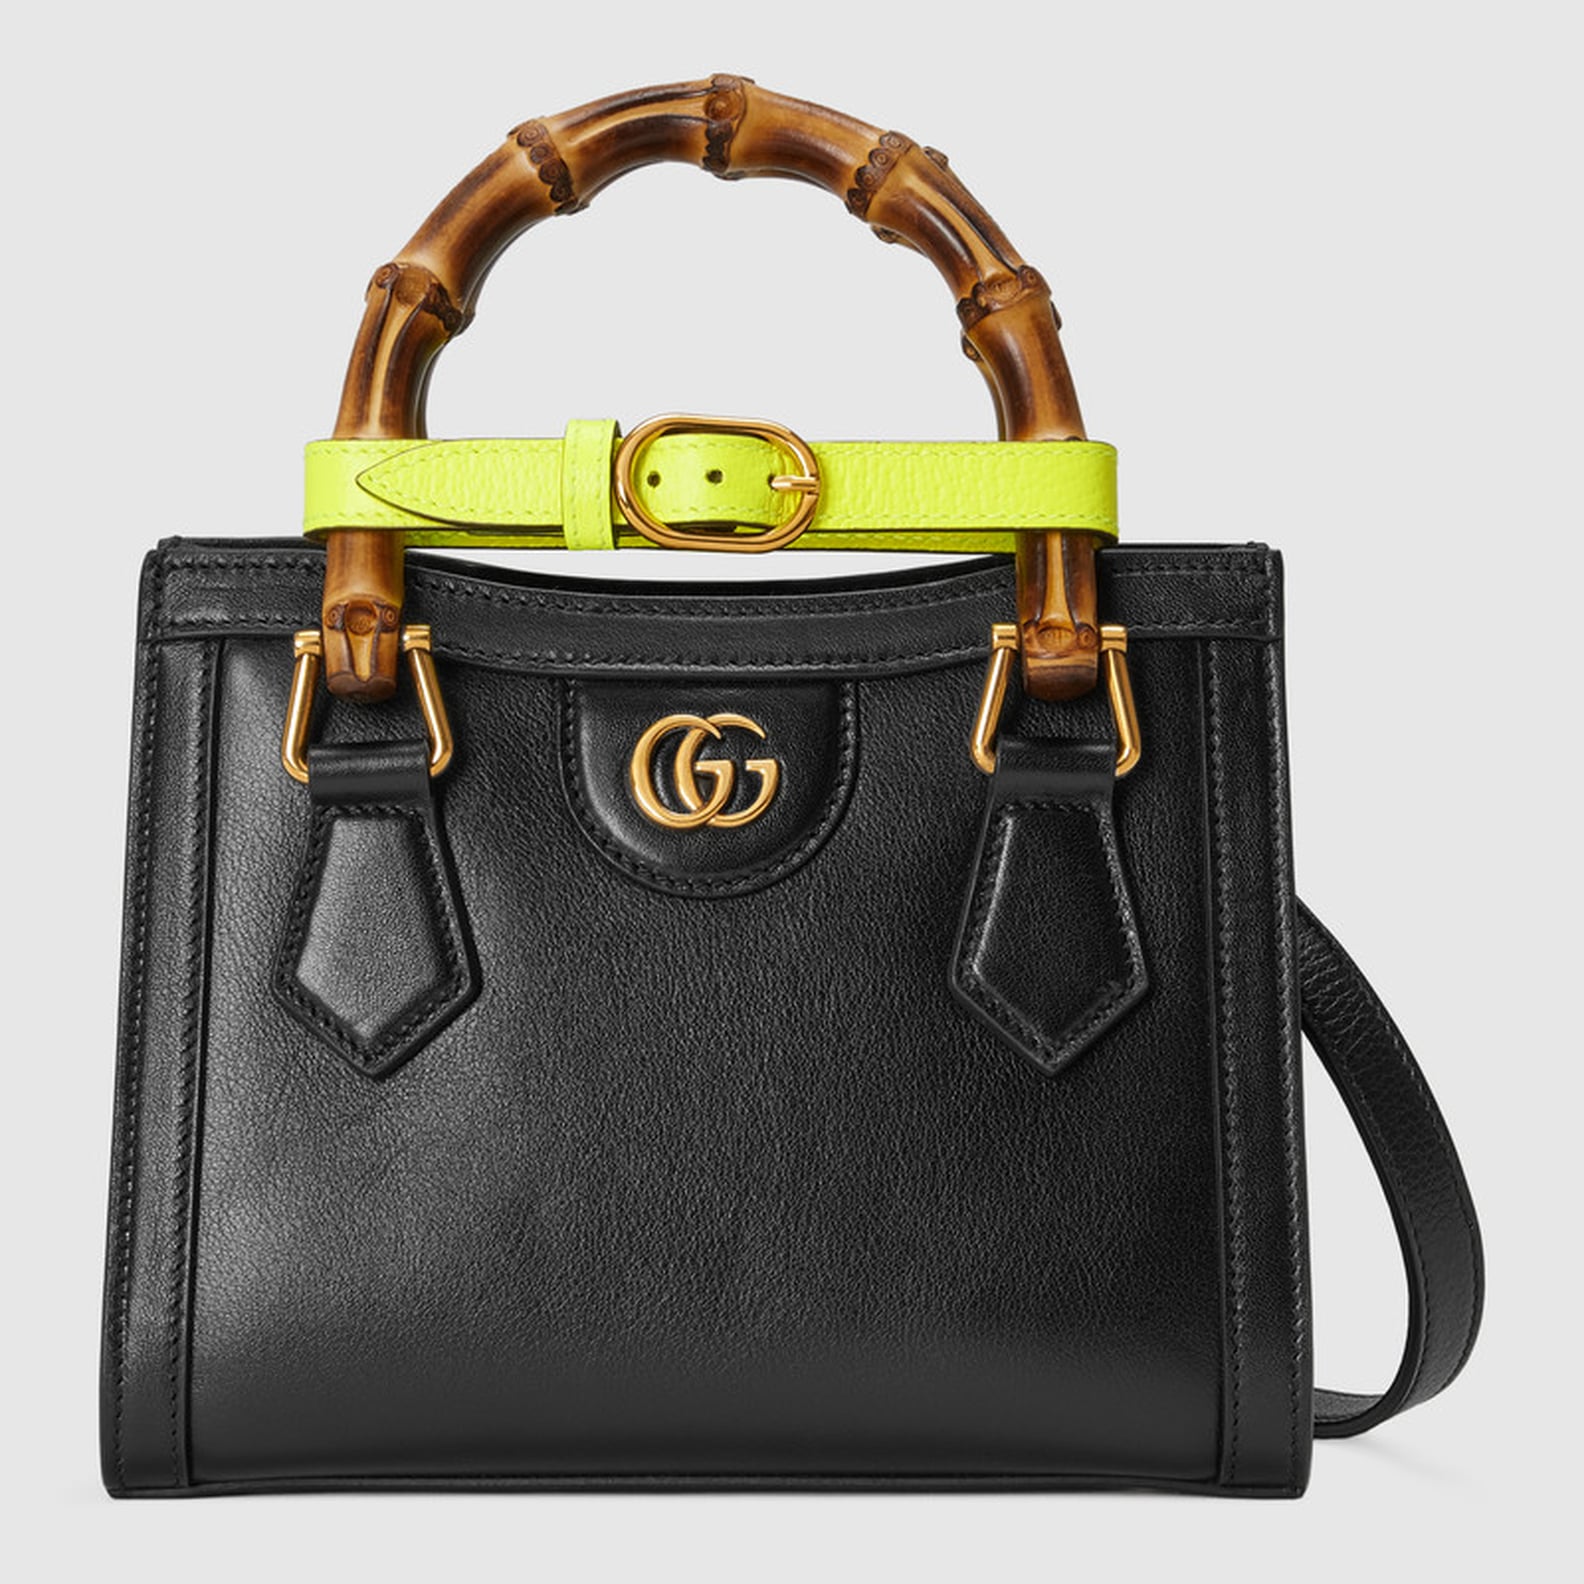 Gucci Recreated Princess Diana's Iconic Handbag | POPSUGAR Fashion